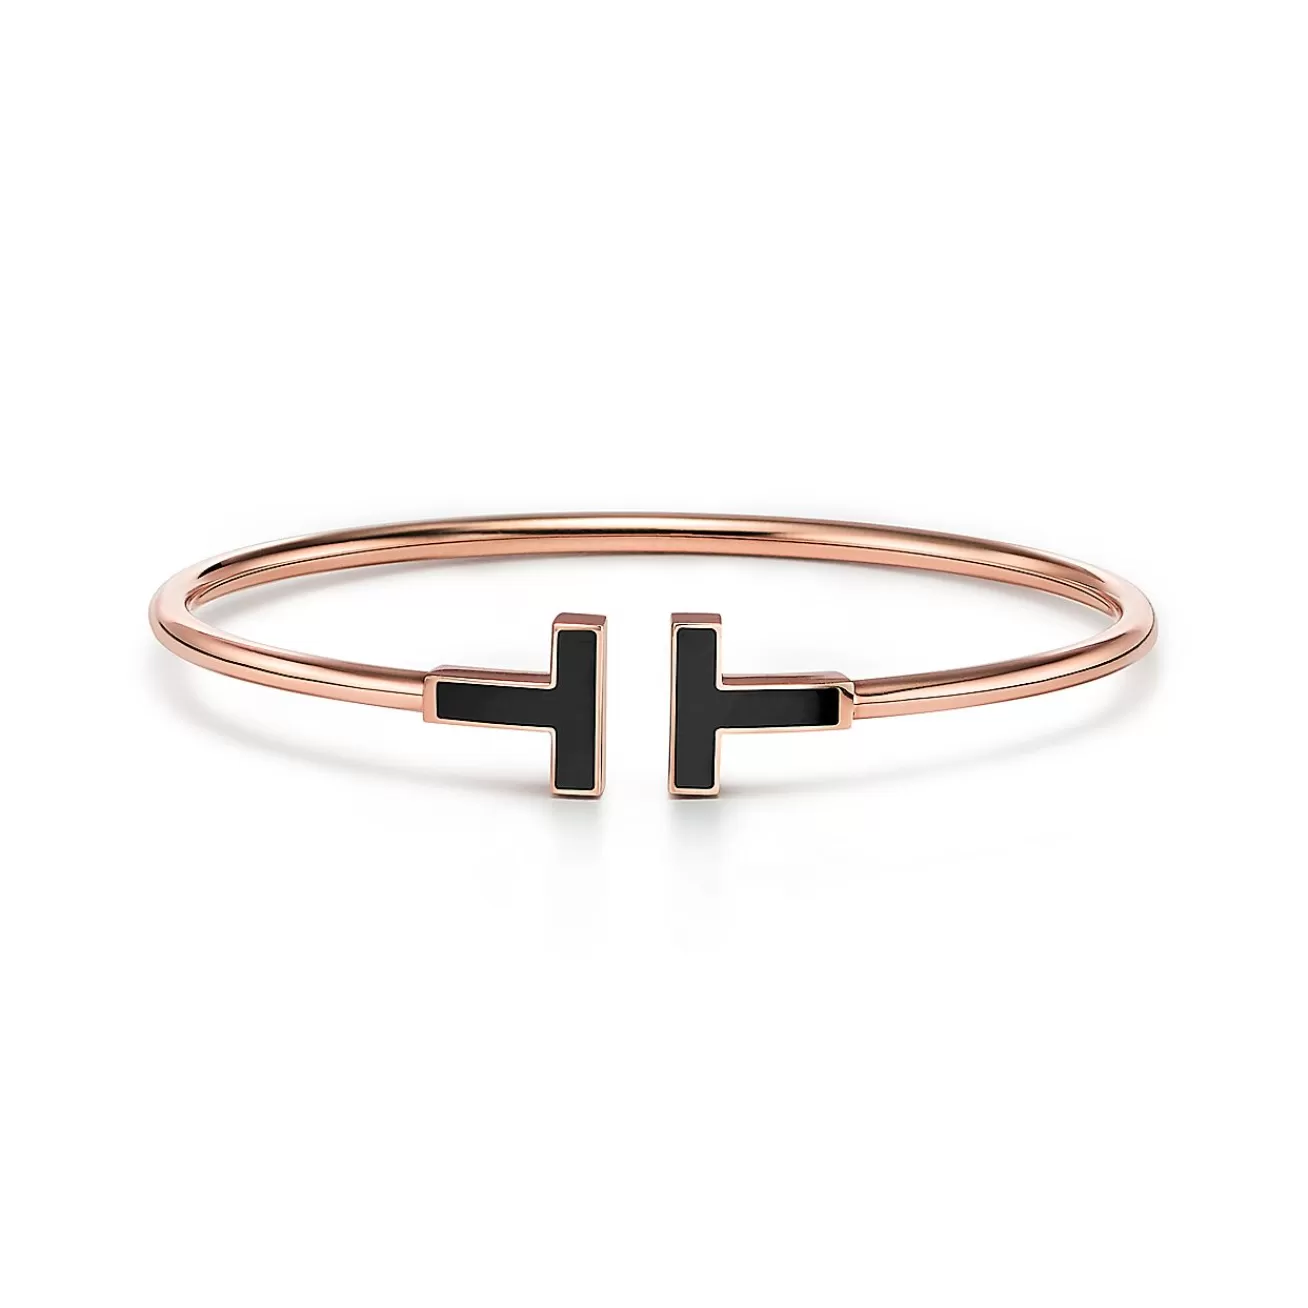 Tiffany & Co. Tiffany T black onyx wire bracelet in 18k rose gold, medium. | ^ Bracelets | Men's Jewelry